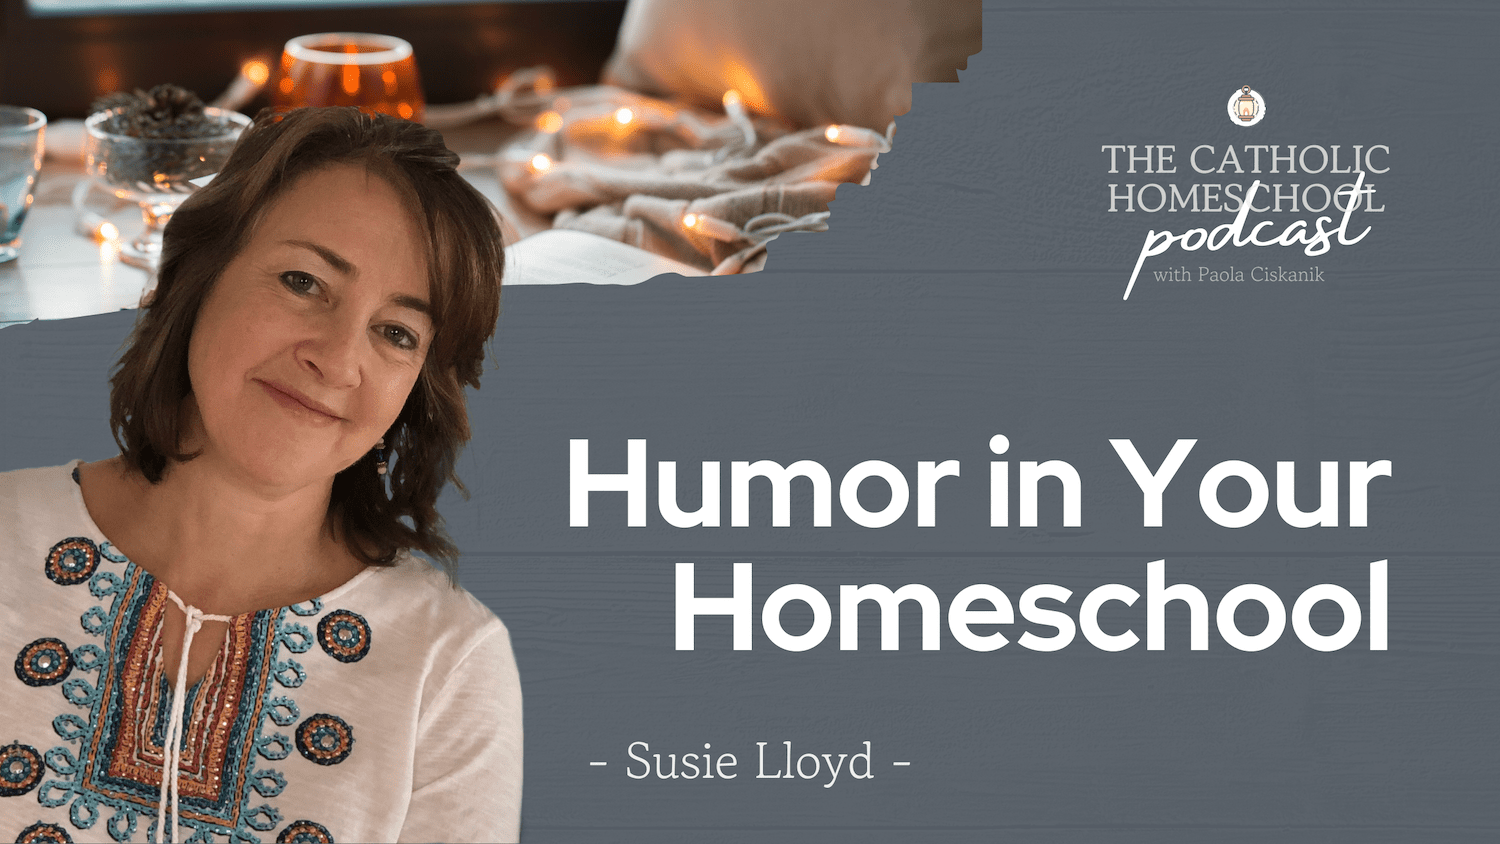 Susie Lloyd | Humor in Your Homeschool | The Catholic Homeschool Podcast